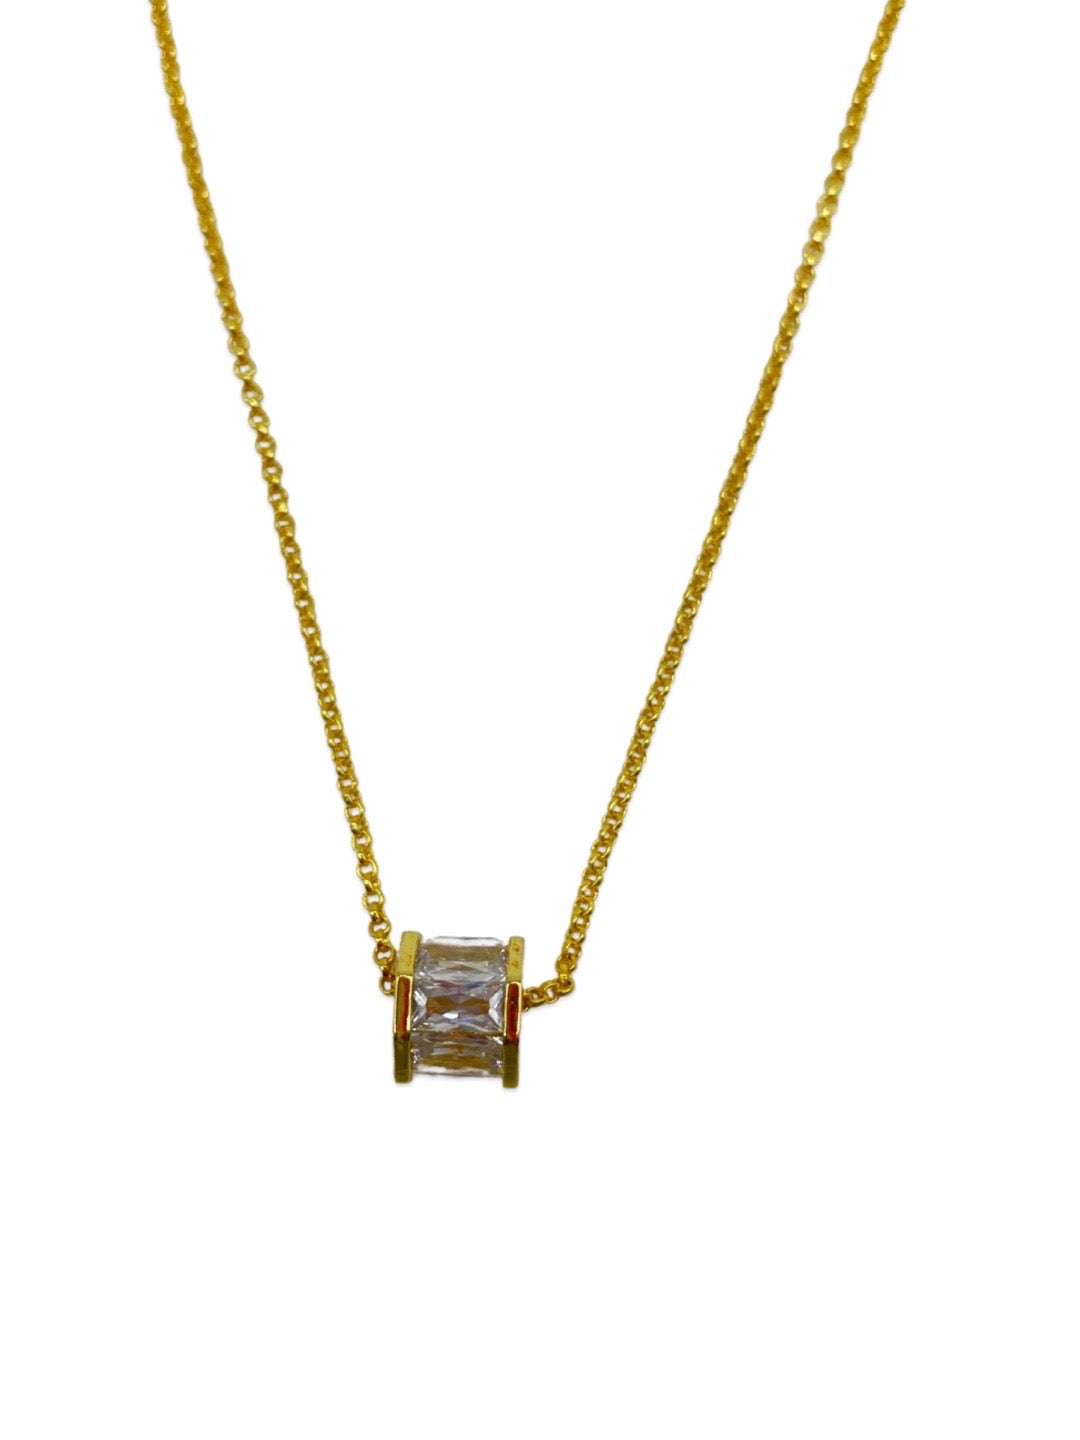 Emerald Cut Diamond Necklace | Jupiter Jewelry Inc